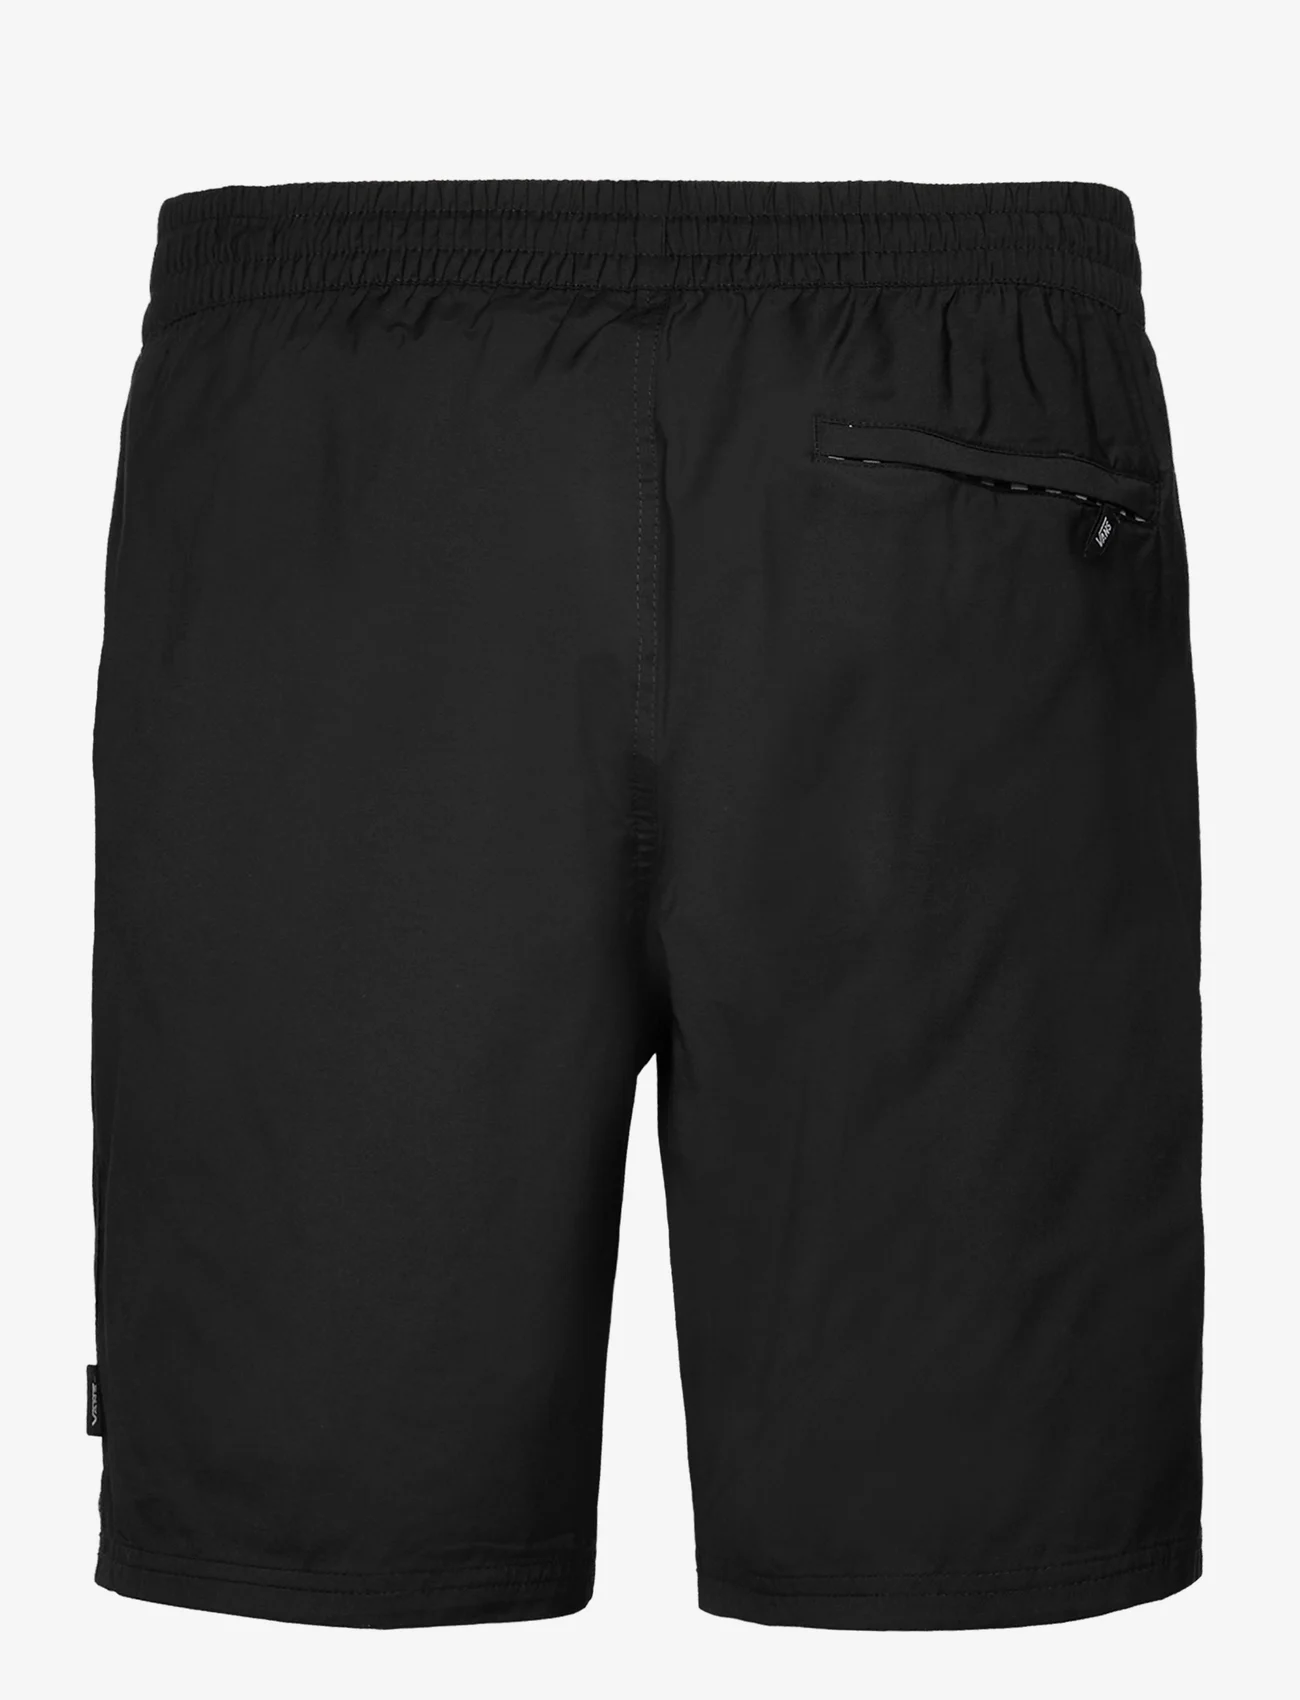 VANS - PRIMARY SOLID ELASTIC BOARDSHORT - sports shorts - black - 1